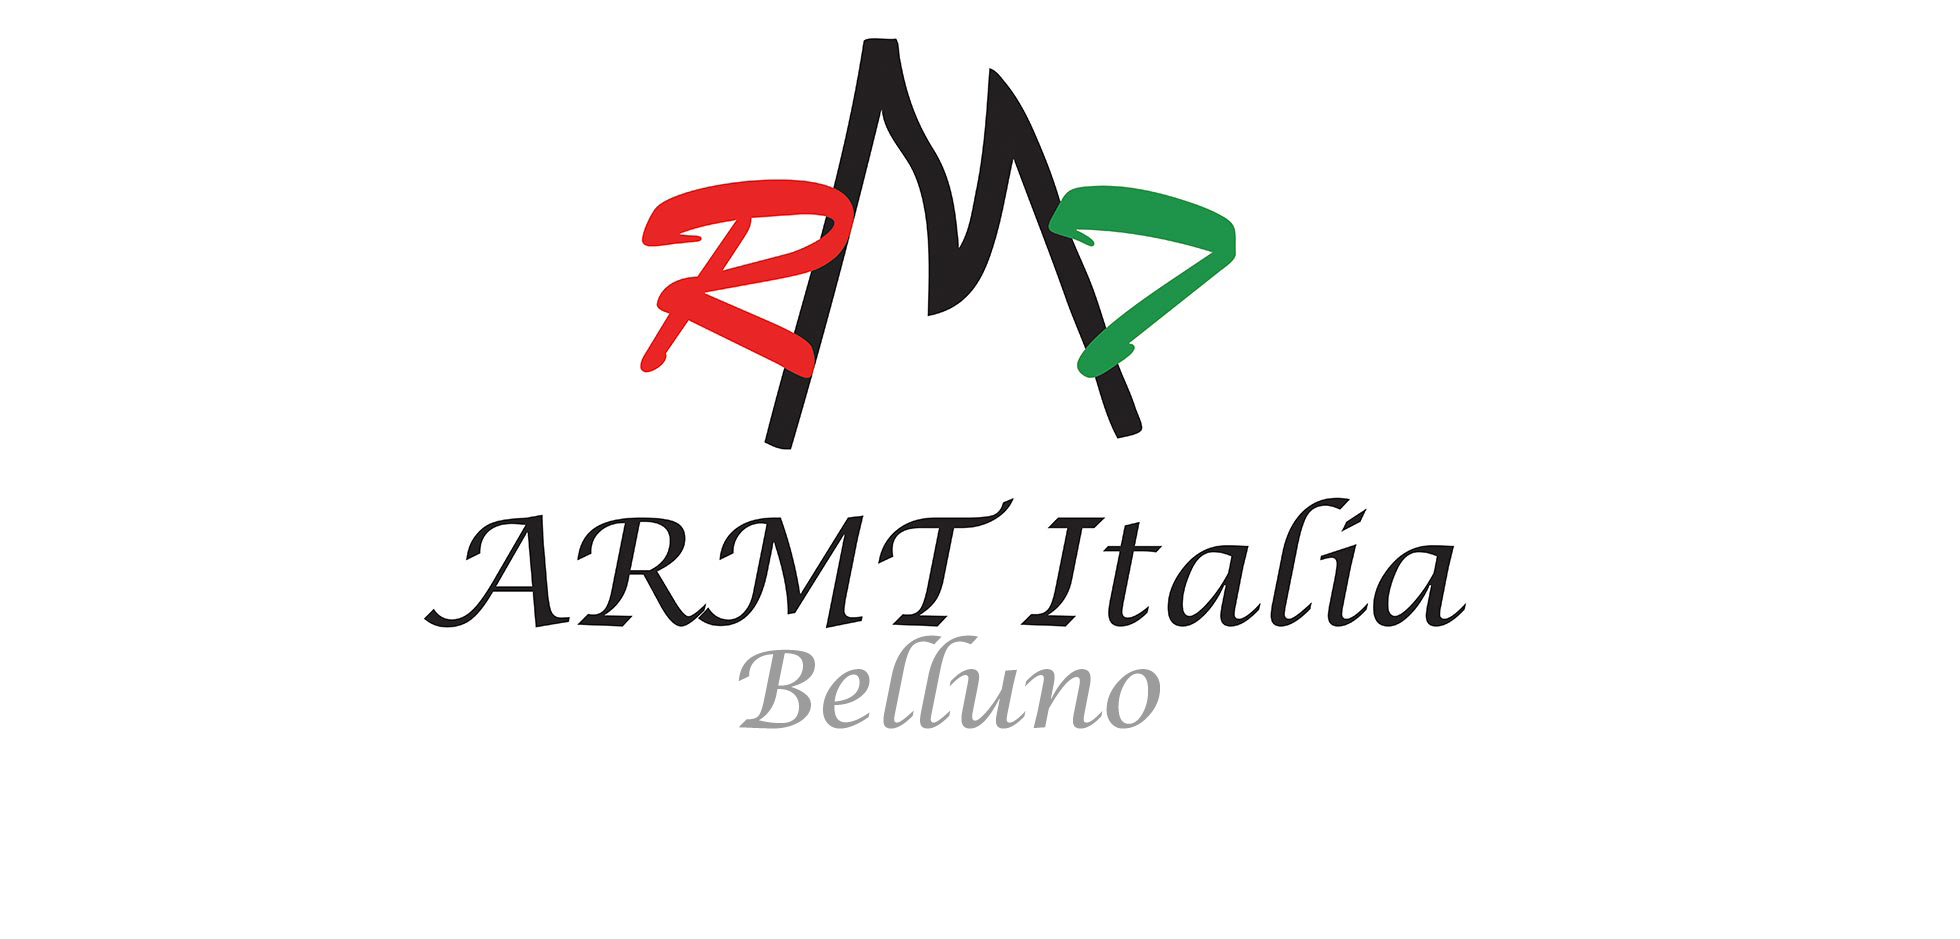 ARMT Italia (Belluno)